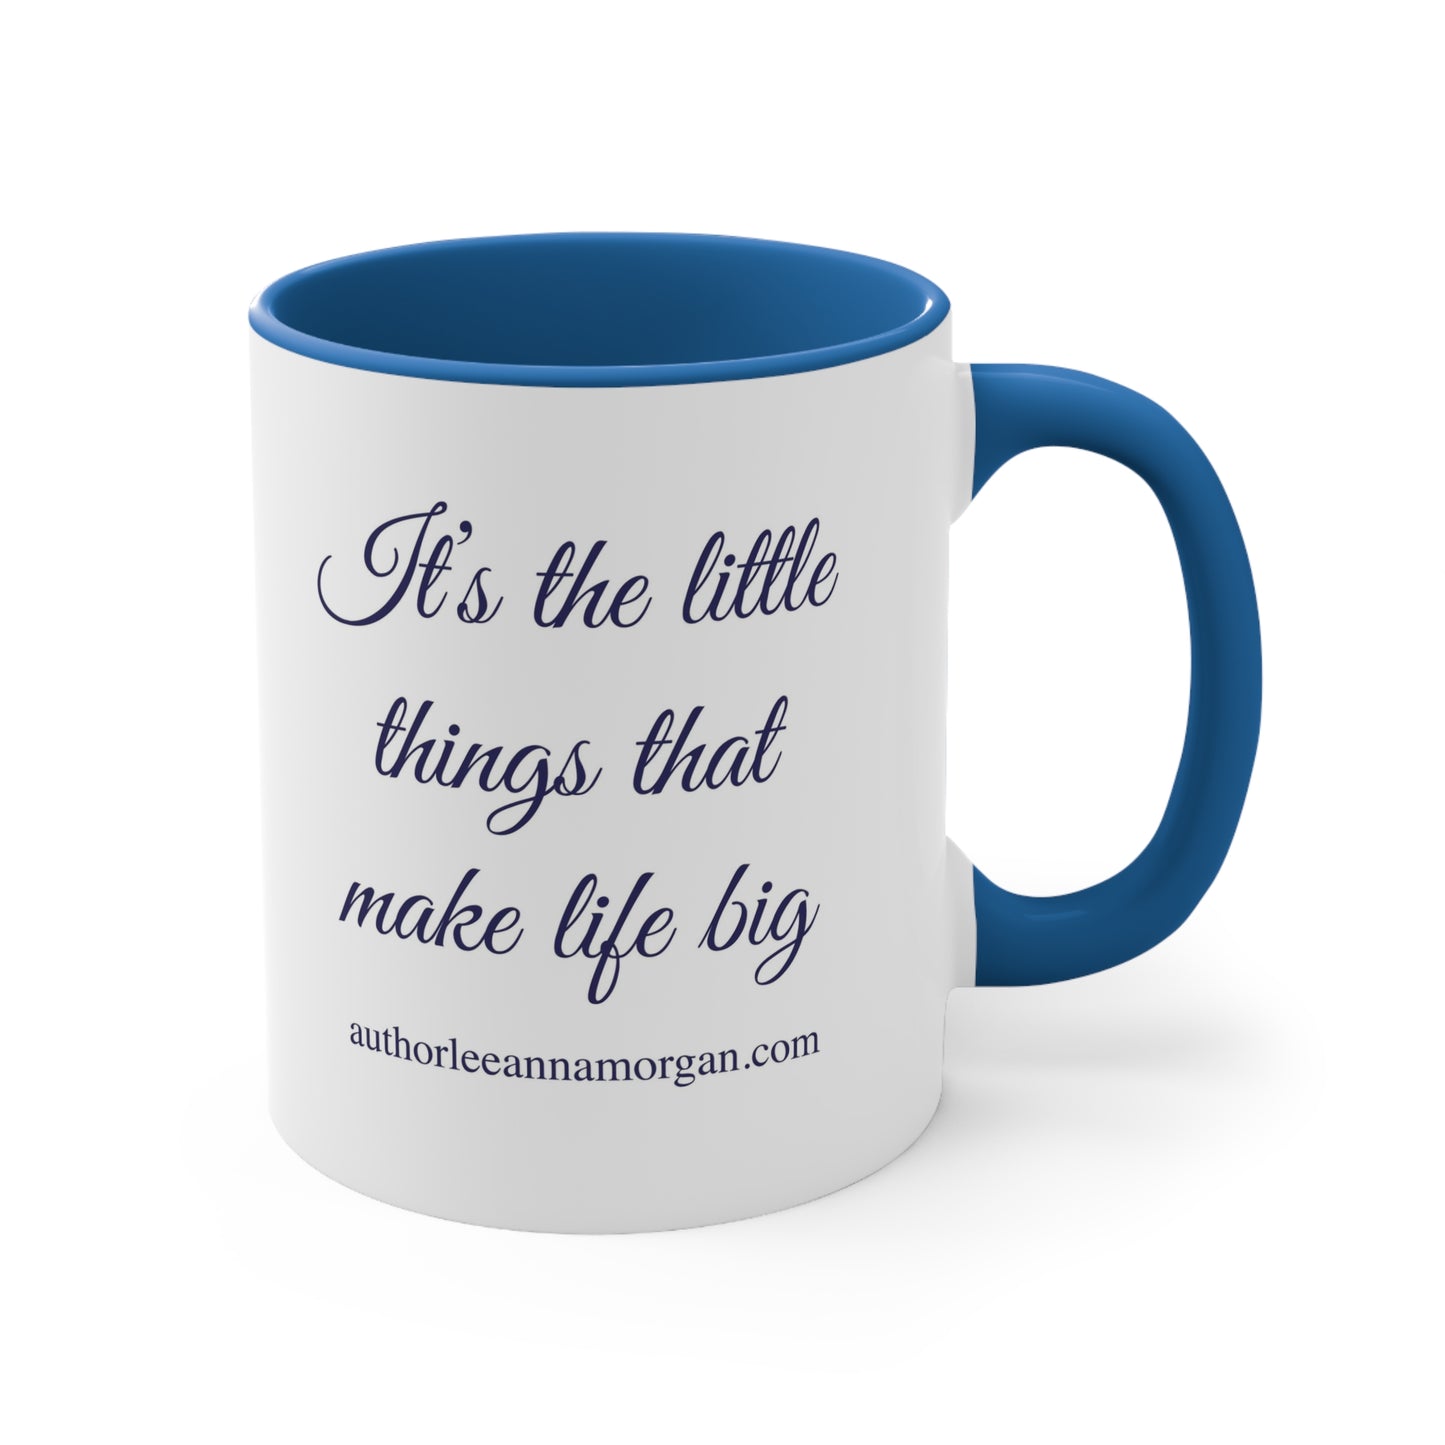 The Lakeside Inn Coffee Mug - It's the tittle things that make life big!